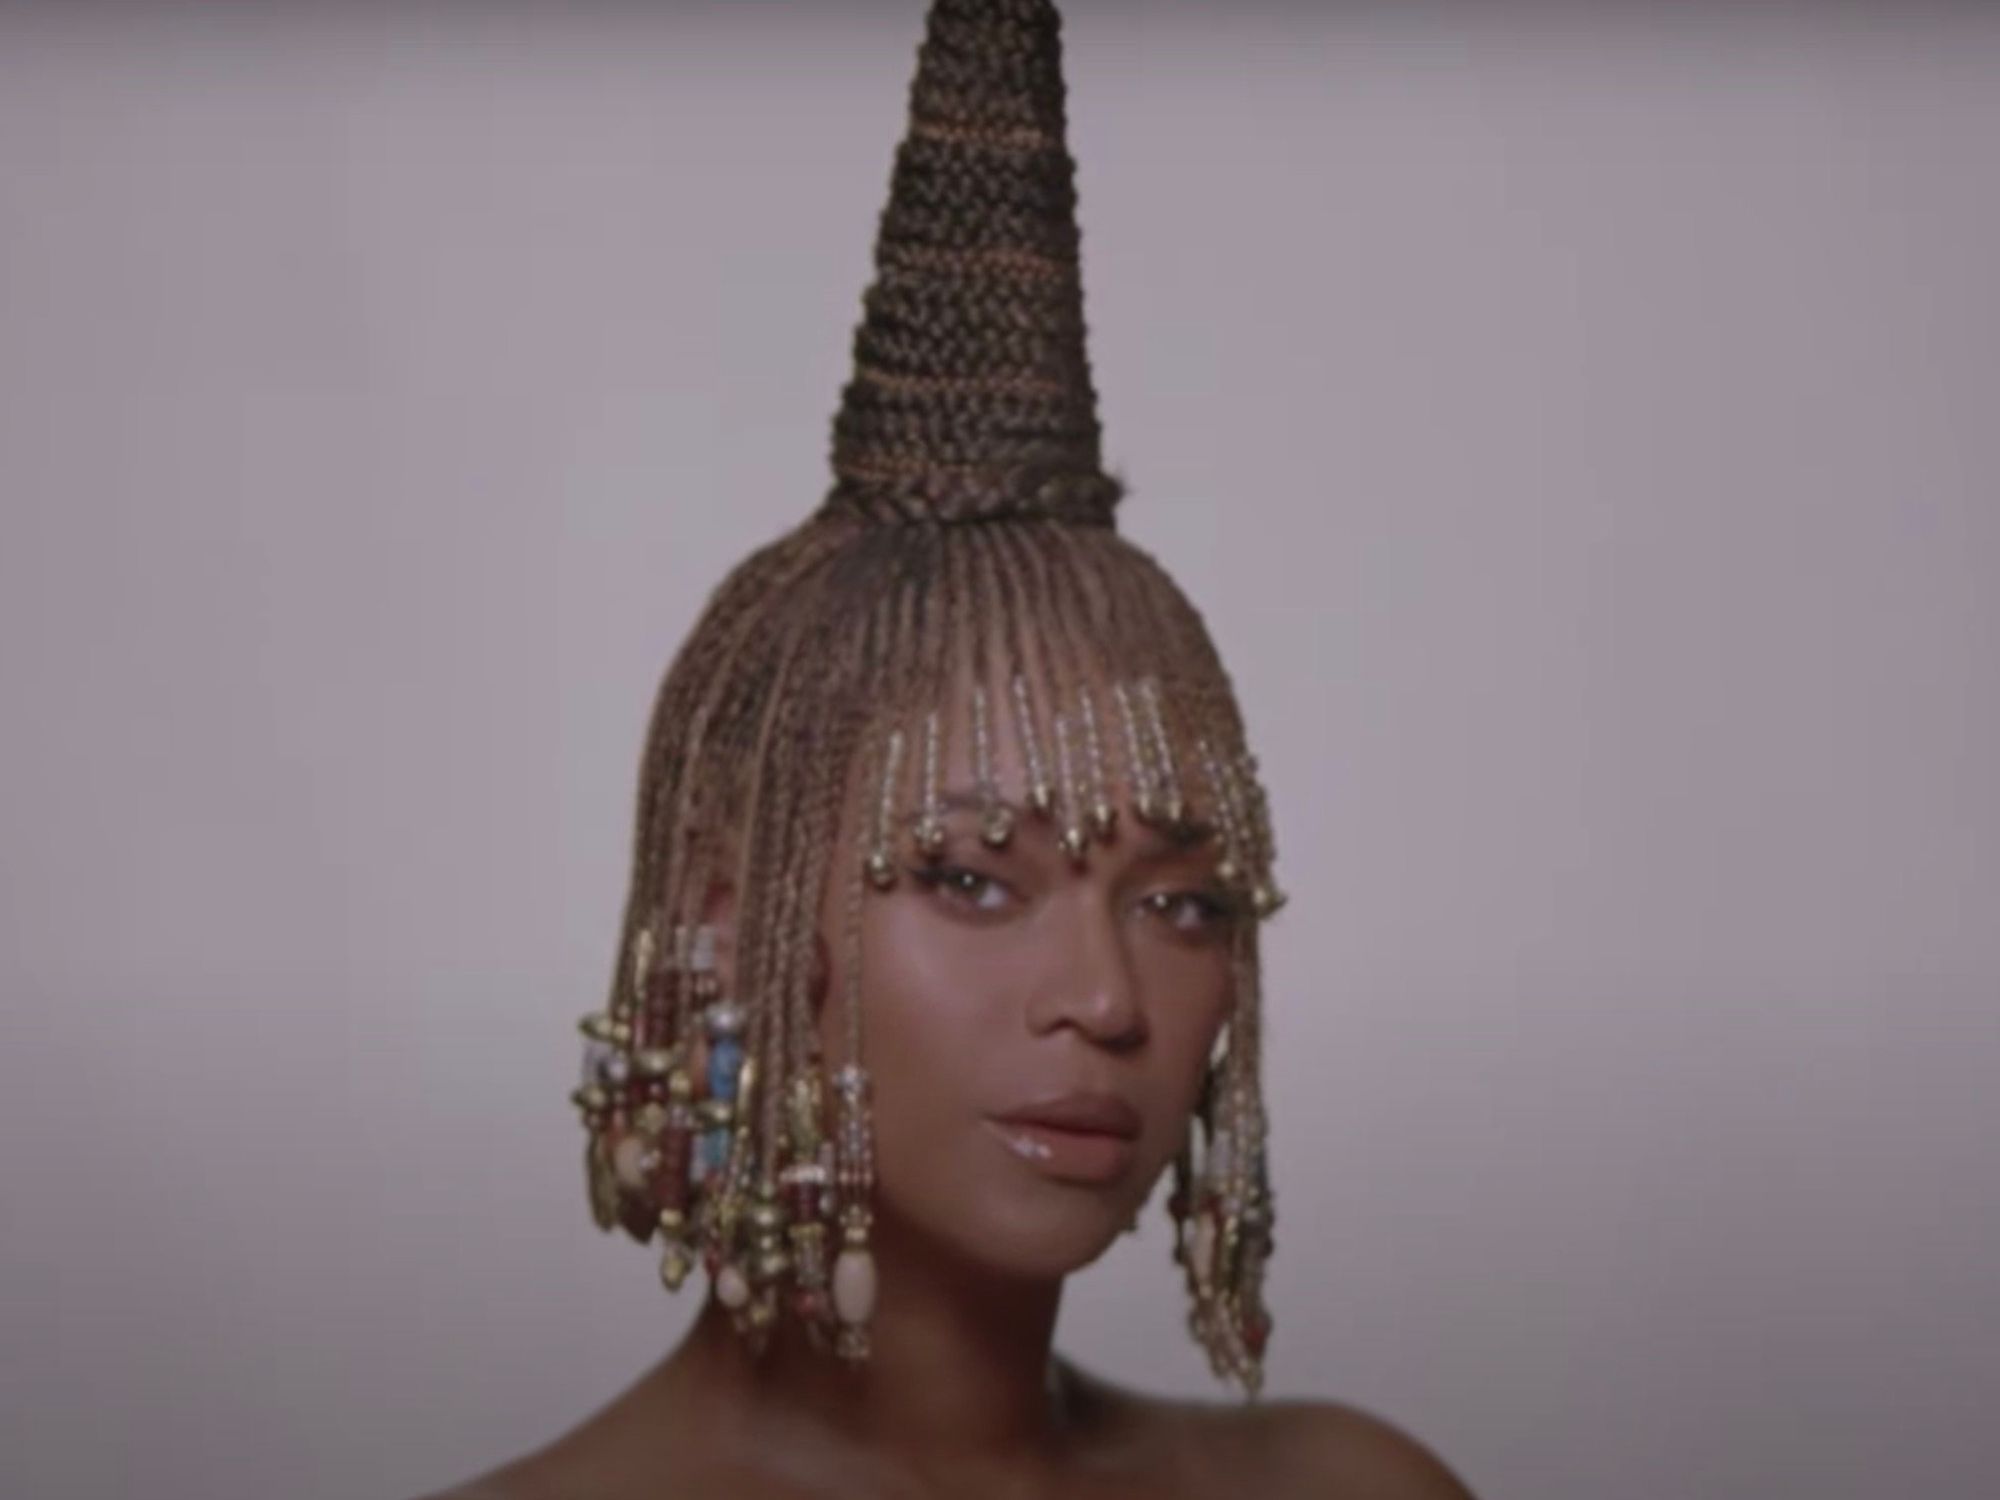 Watch Beyoncé's Video For 'Brown Skin Girl' Featuring Wizkid, Lupita Nyong'o & More